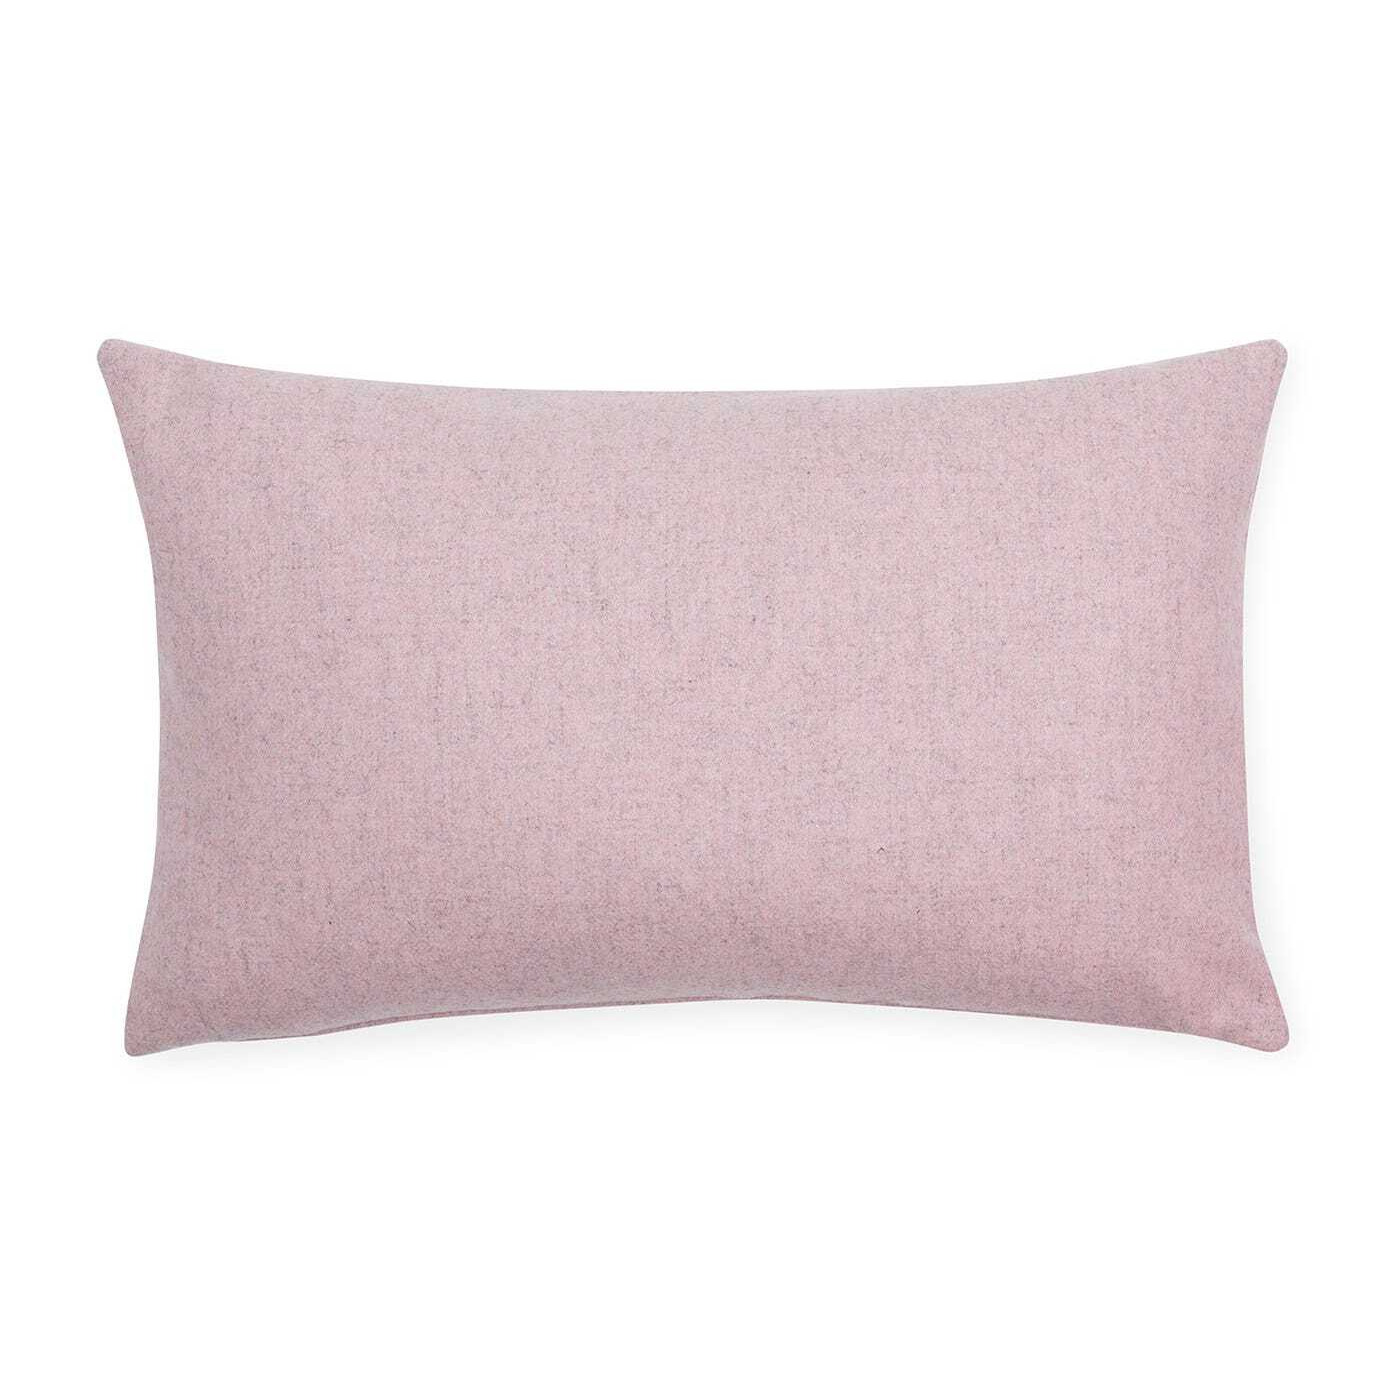 Heal's Islington Cushion Blush 35 x 55cm - image 1